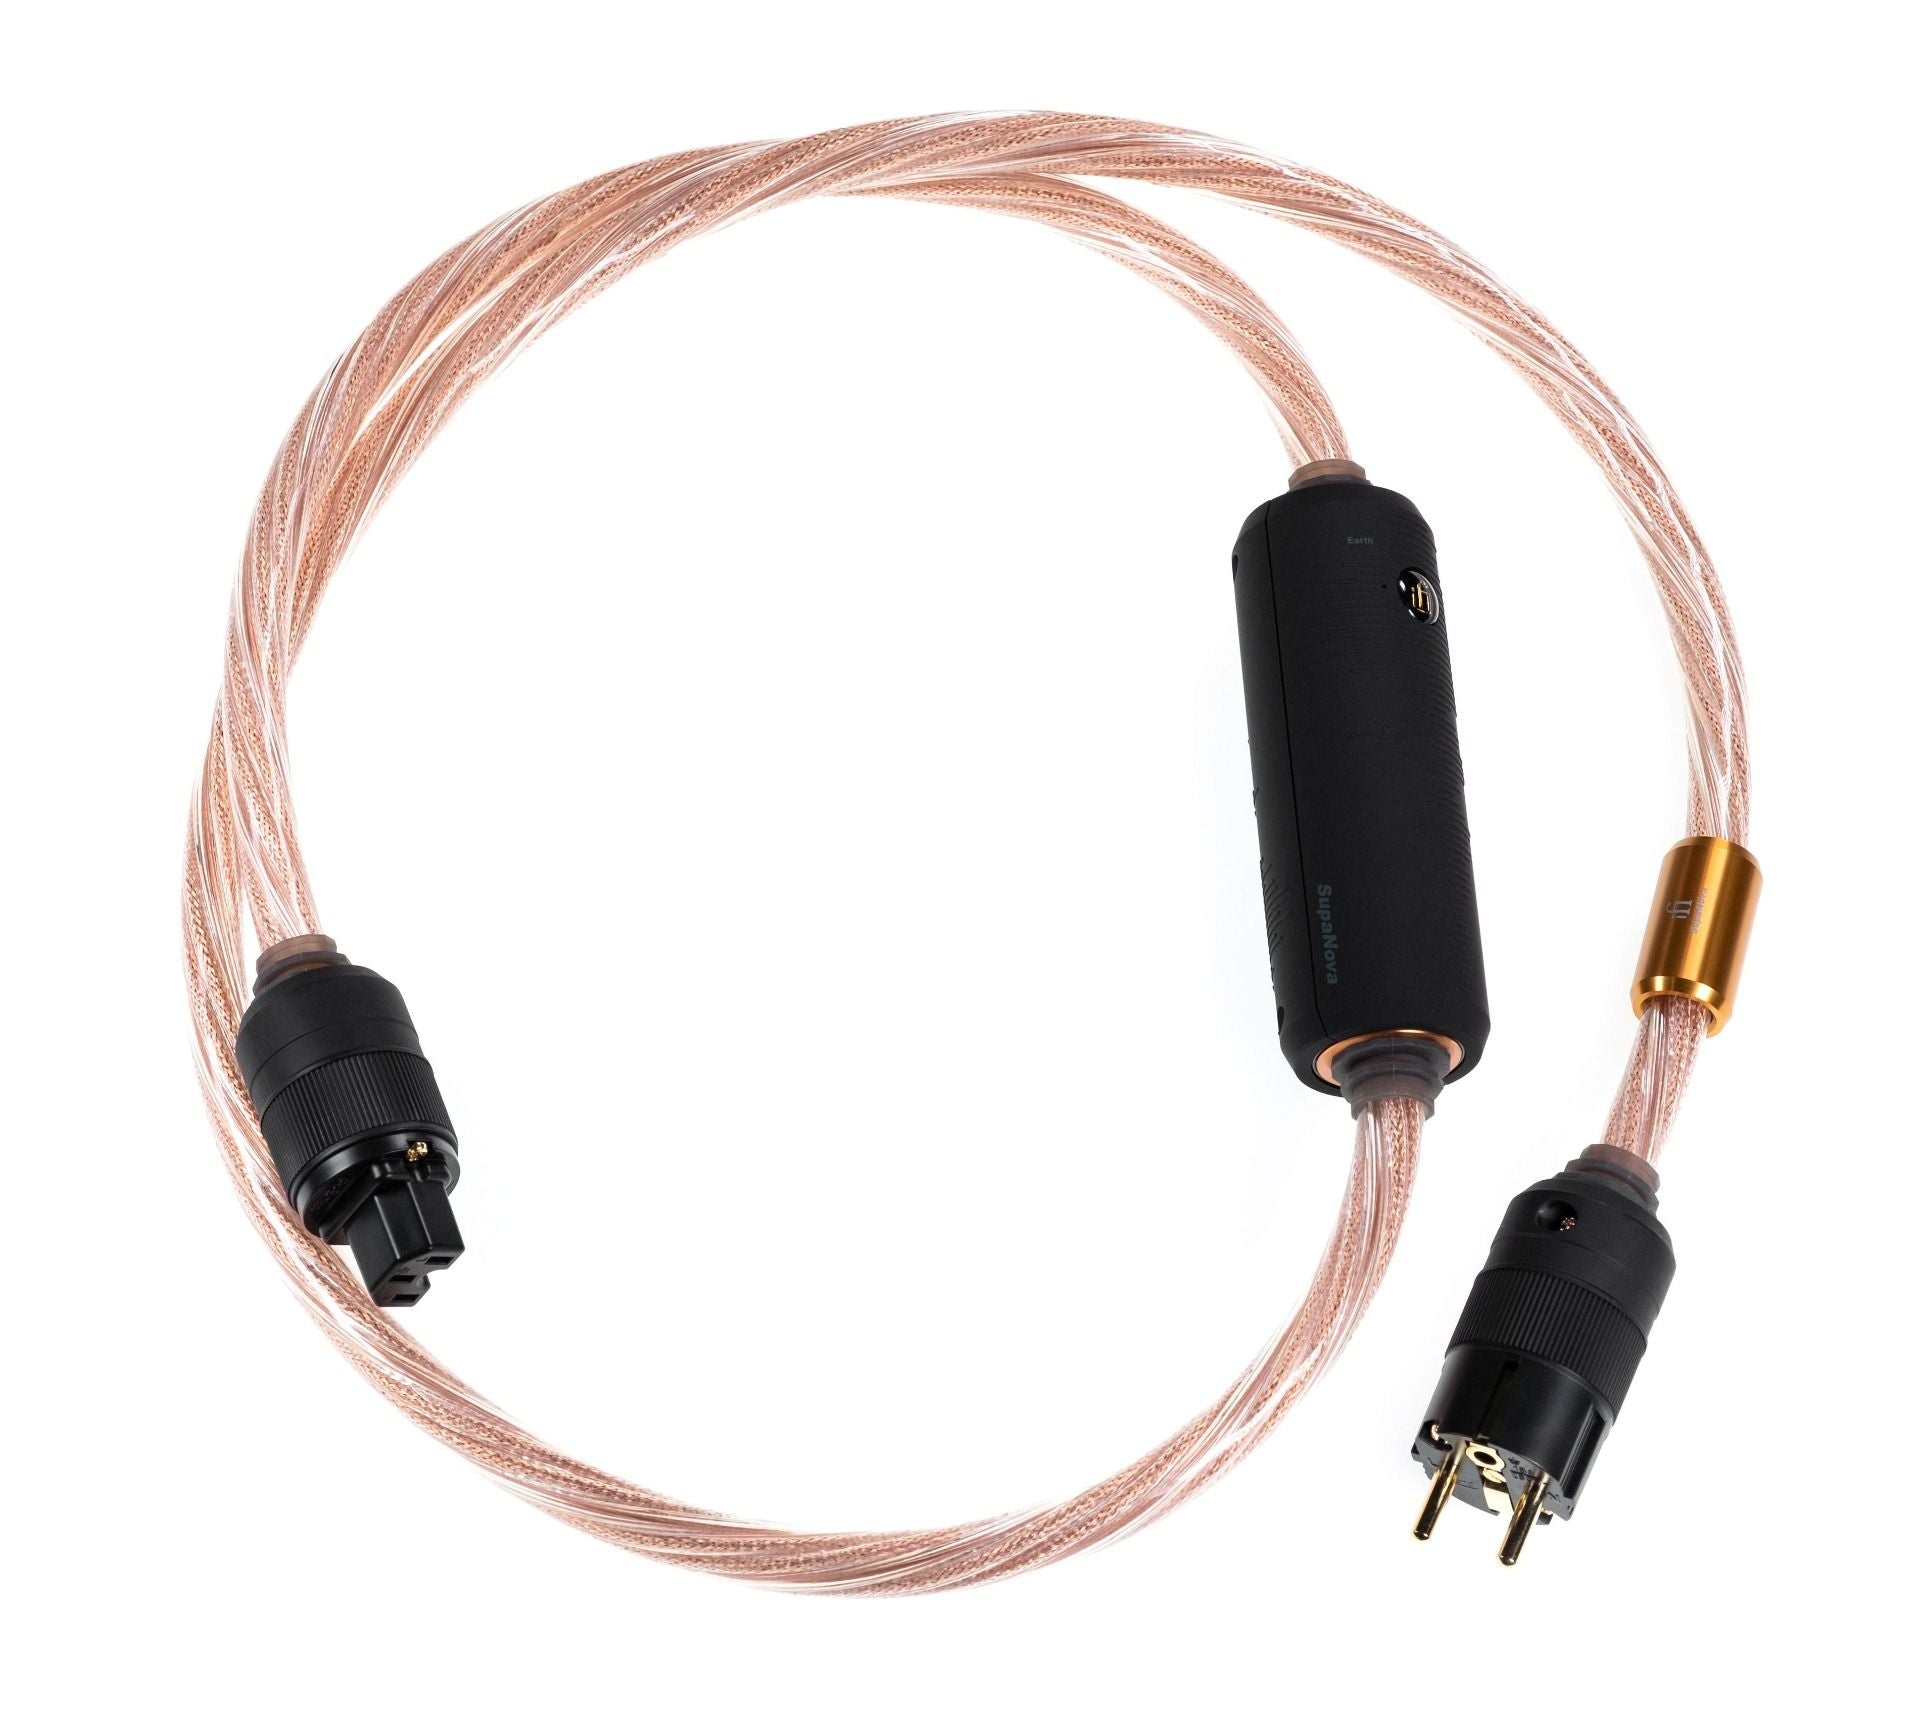 Suppanova power cable